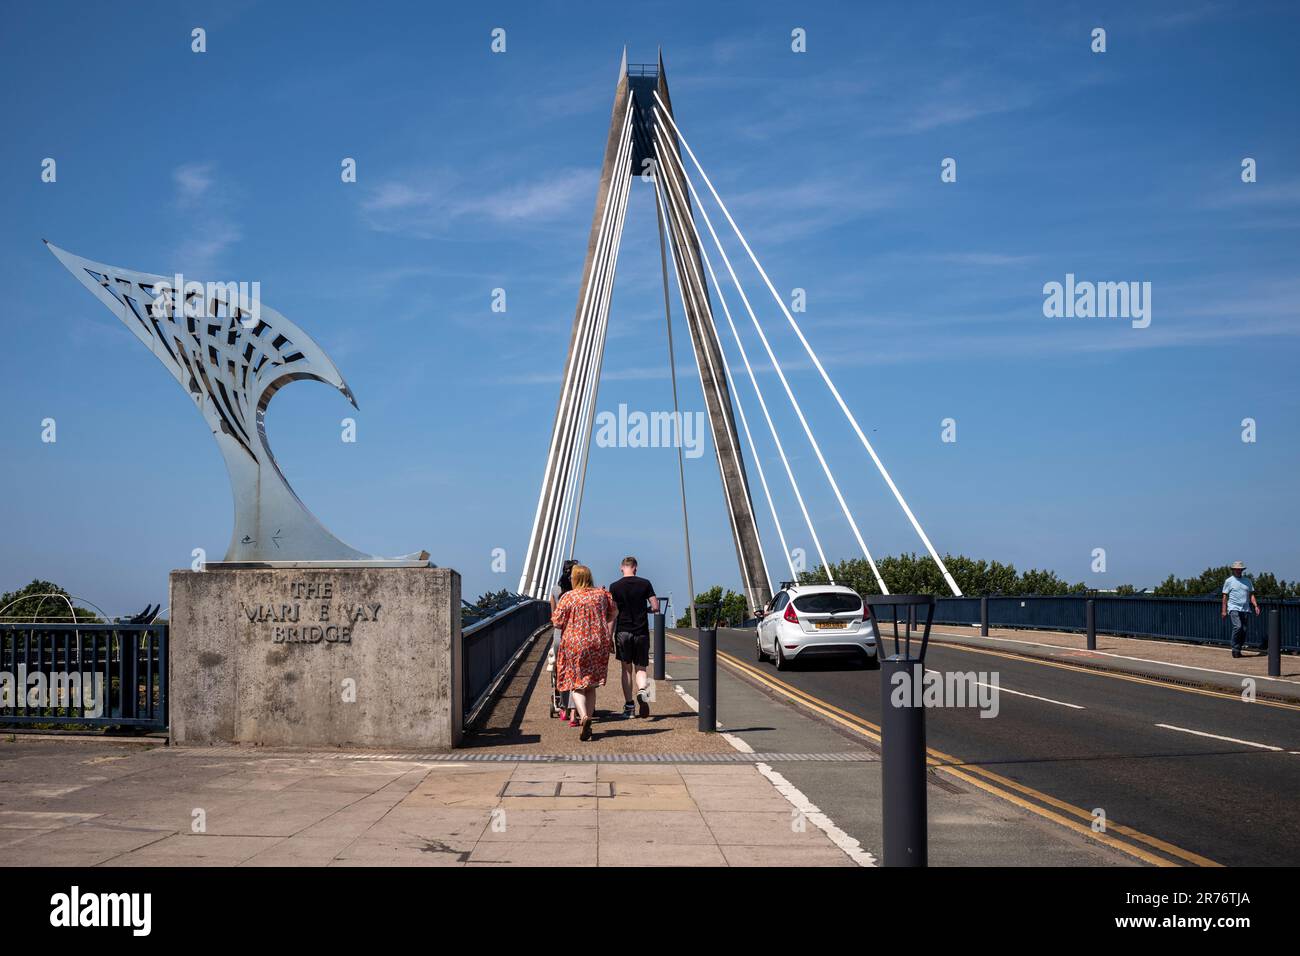 Southport, Merseyside, UK. The Marine Way Bridge on a warm and sunny day. Stock Photo